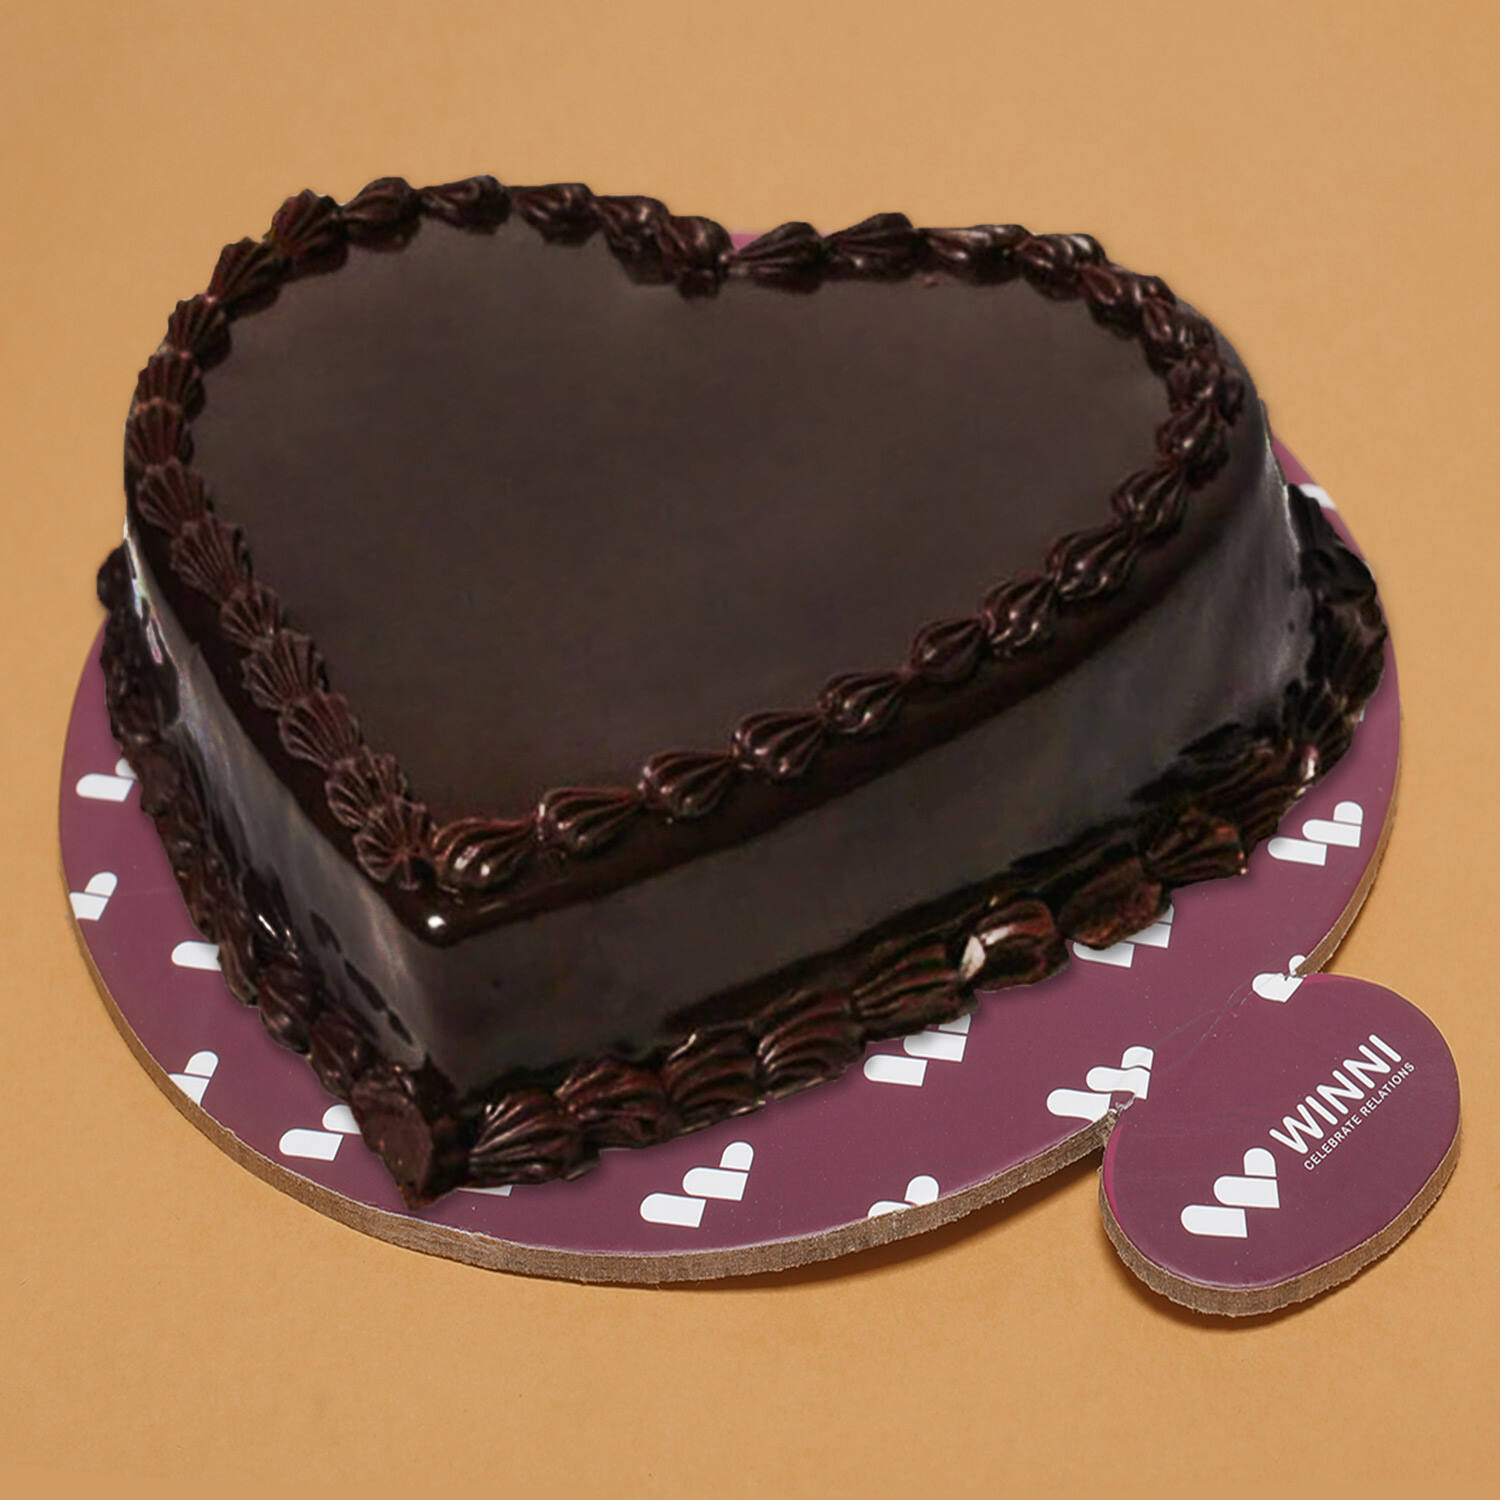 Chocolate Heart Cake - Valentine Day Special Cake